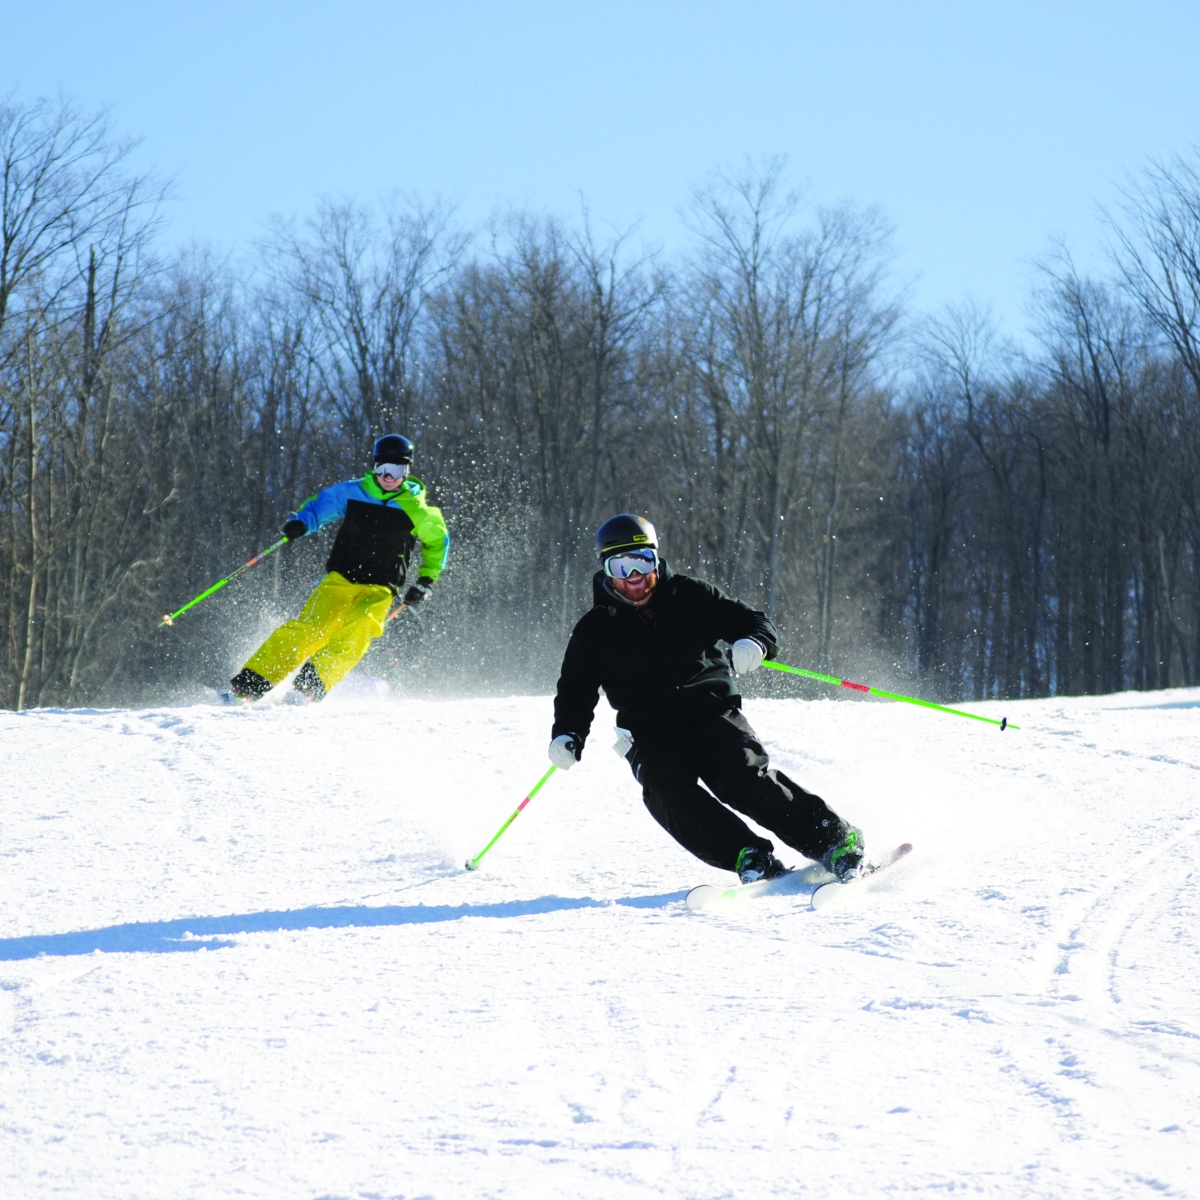 Skiers speeding downhill at HoliMont